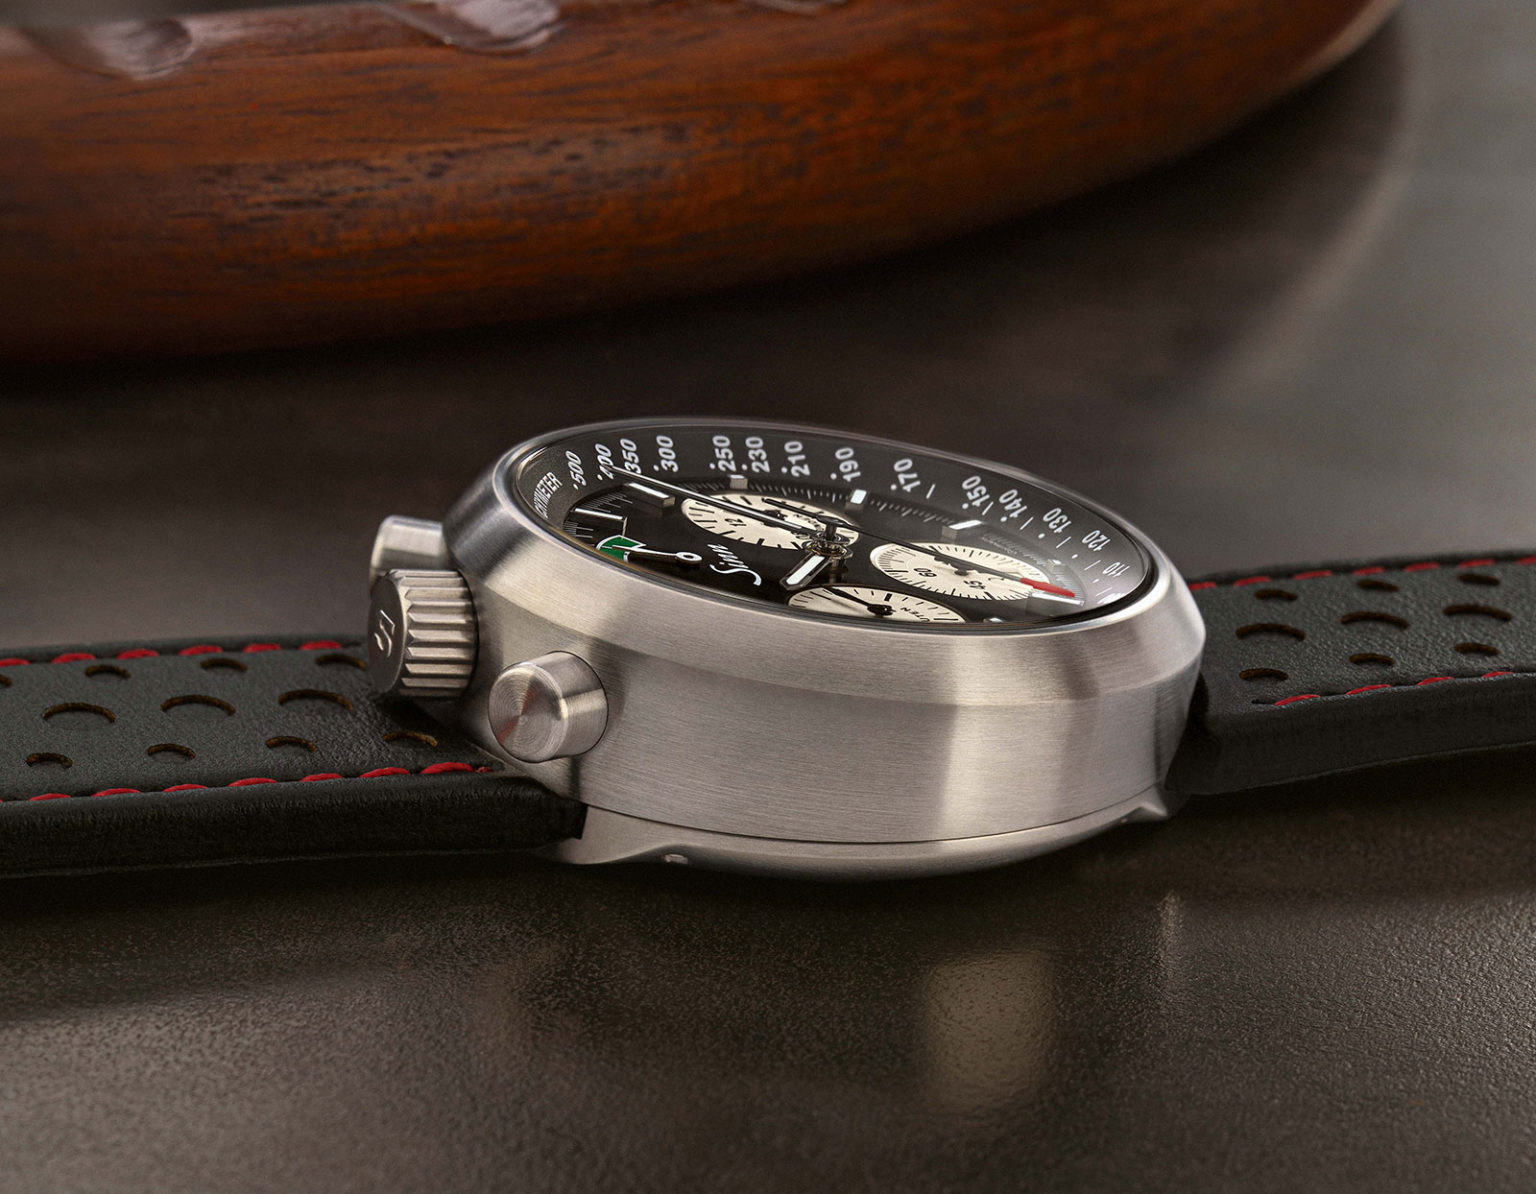 Sinn Introduces The R500 Chronograph Sjx Watches 4420